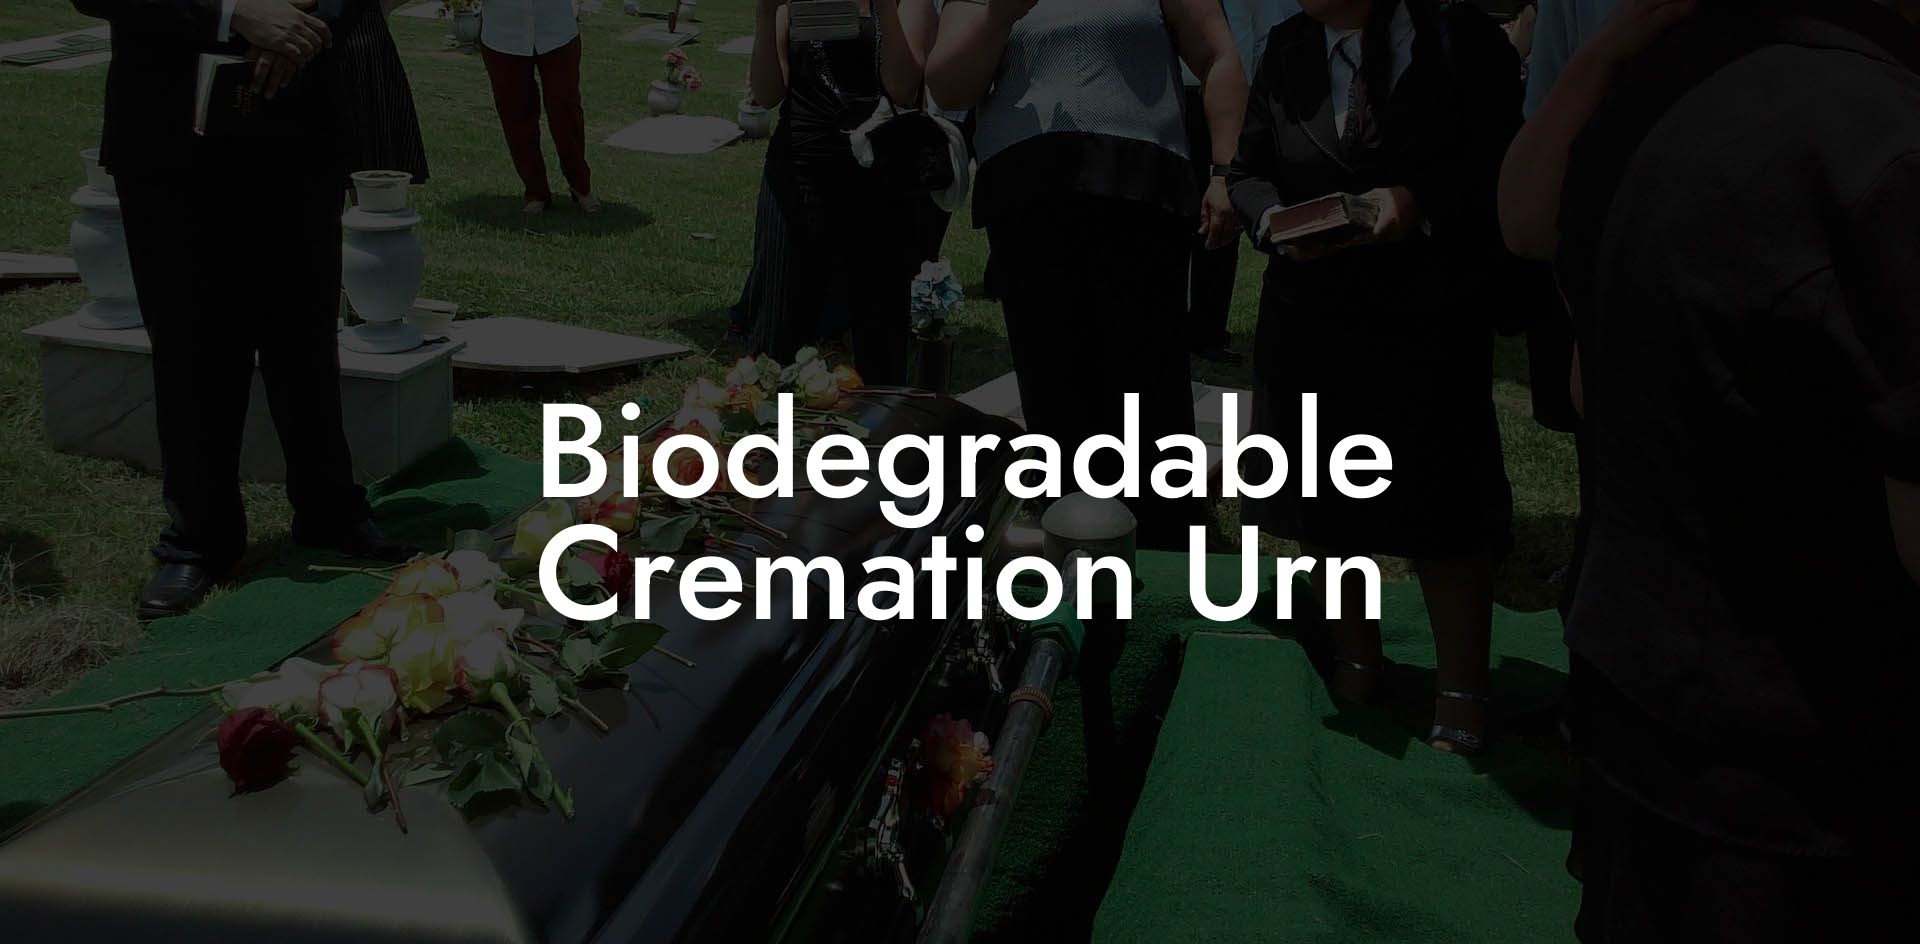 Biodegradable Cremation Urn